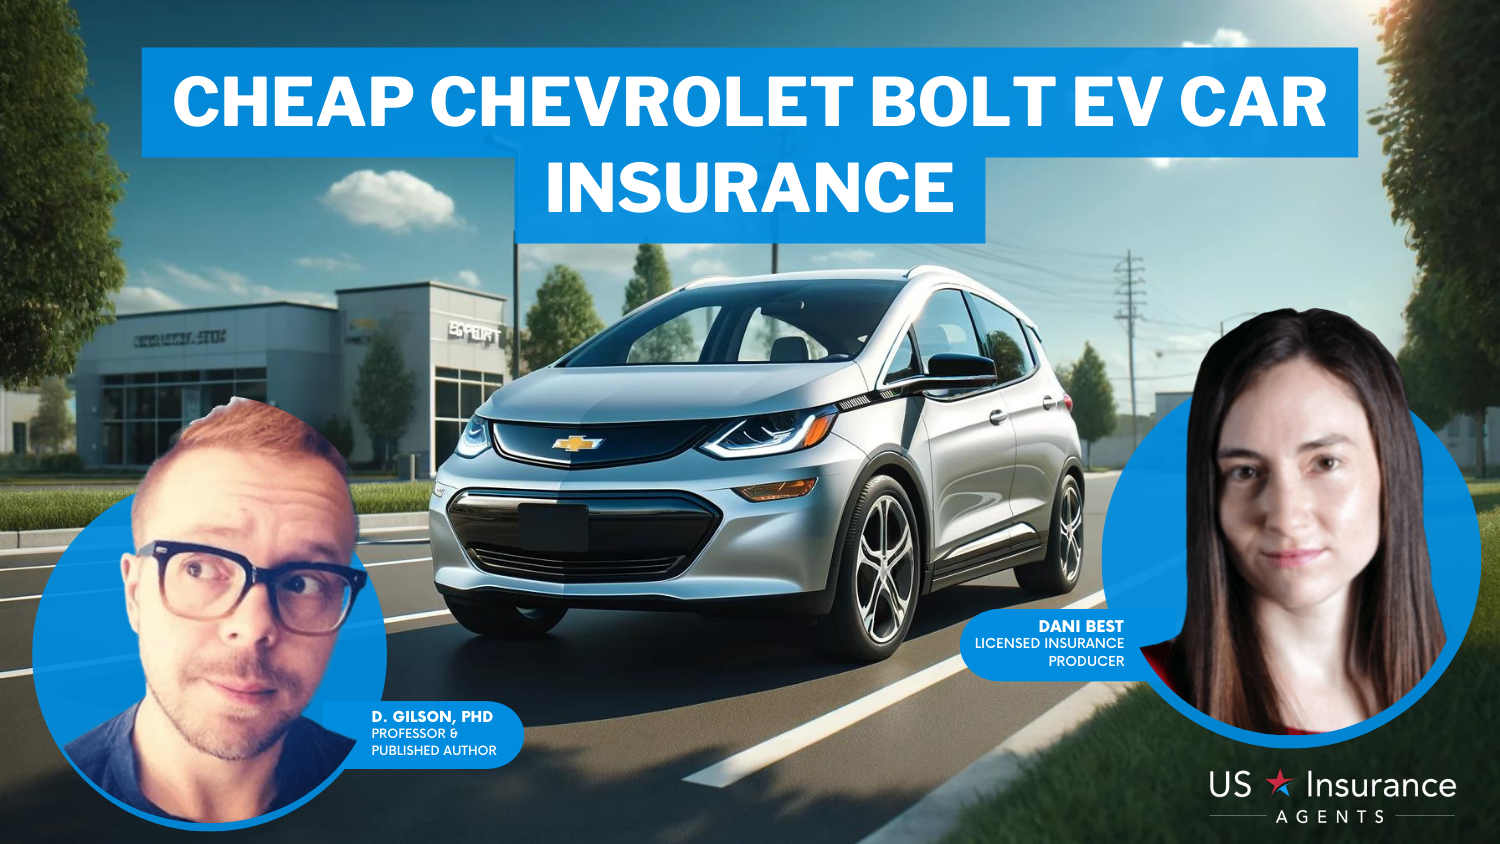 Cheap Chevrolet Bolt EV Car Insurance: Nationwide, Safeco, and Progressive